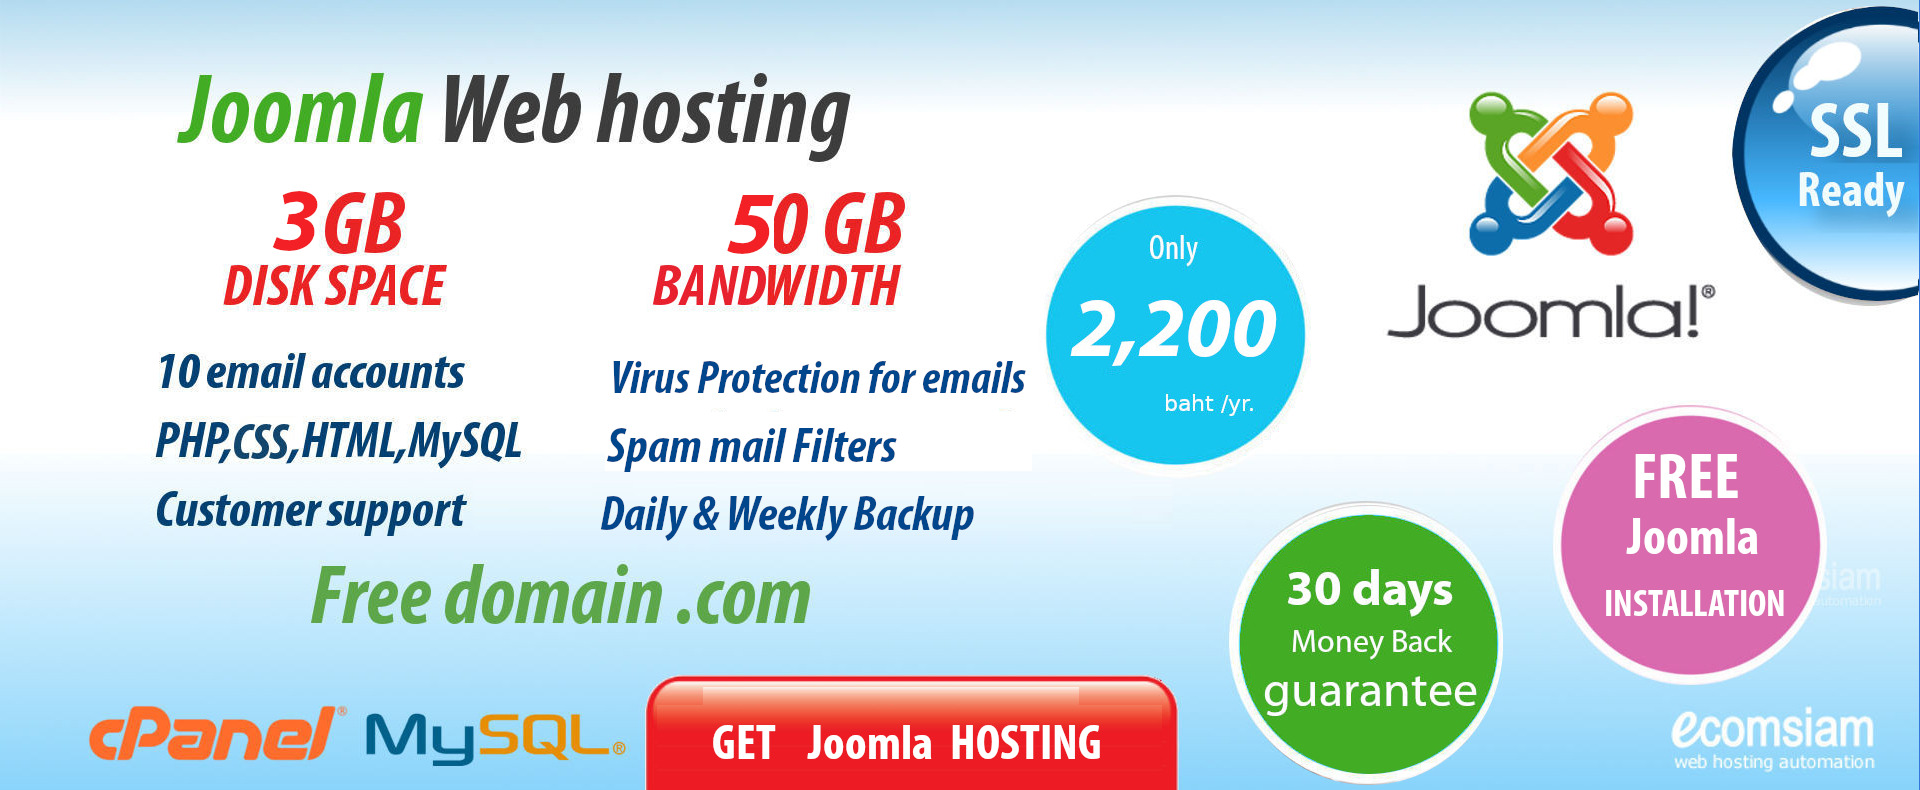 web hosting thai บริการเว็บโฮสติ้ง ฟรีโดเมน ฟรี SSL - joomla web hosting thailand free domain - joomla web hosting-banner